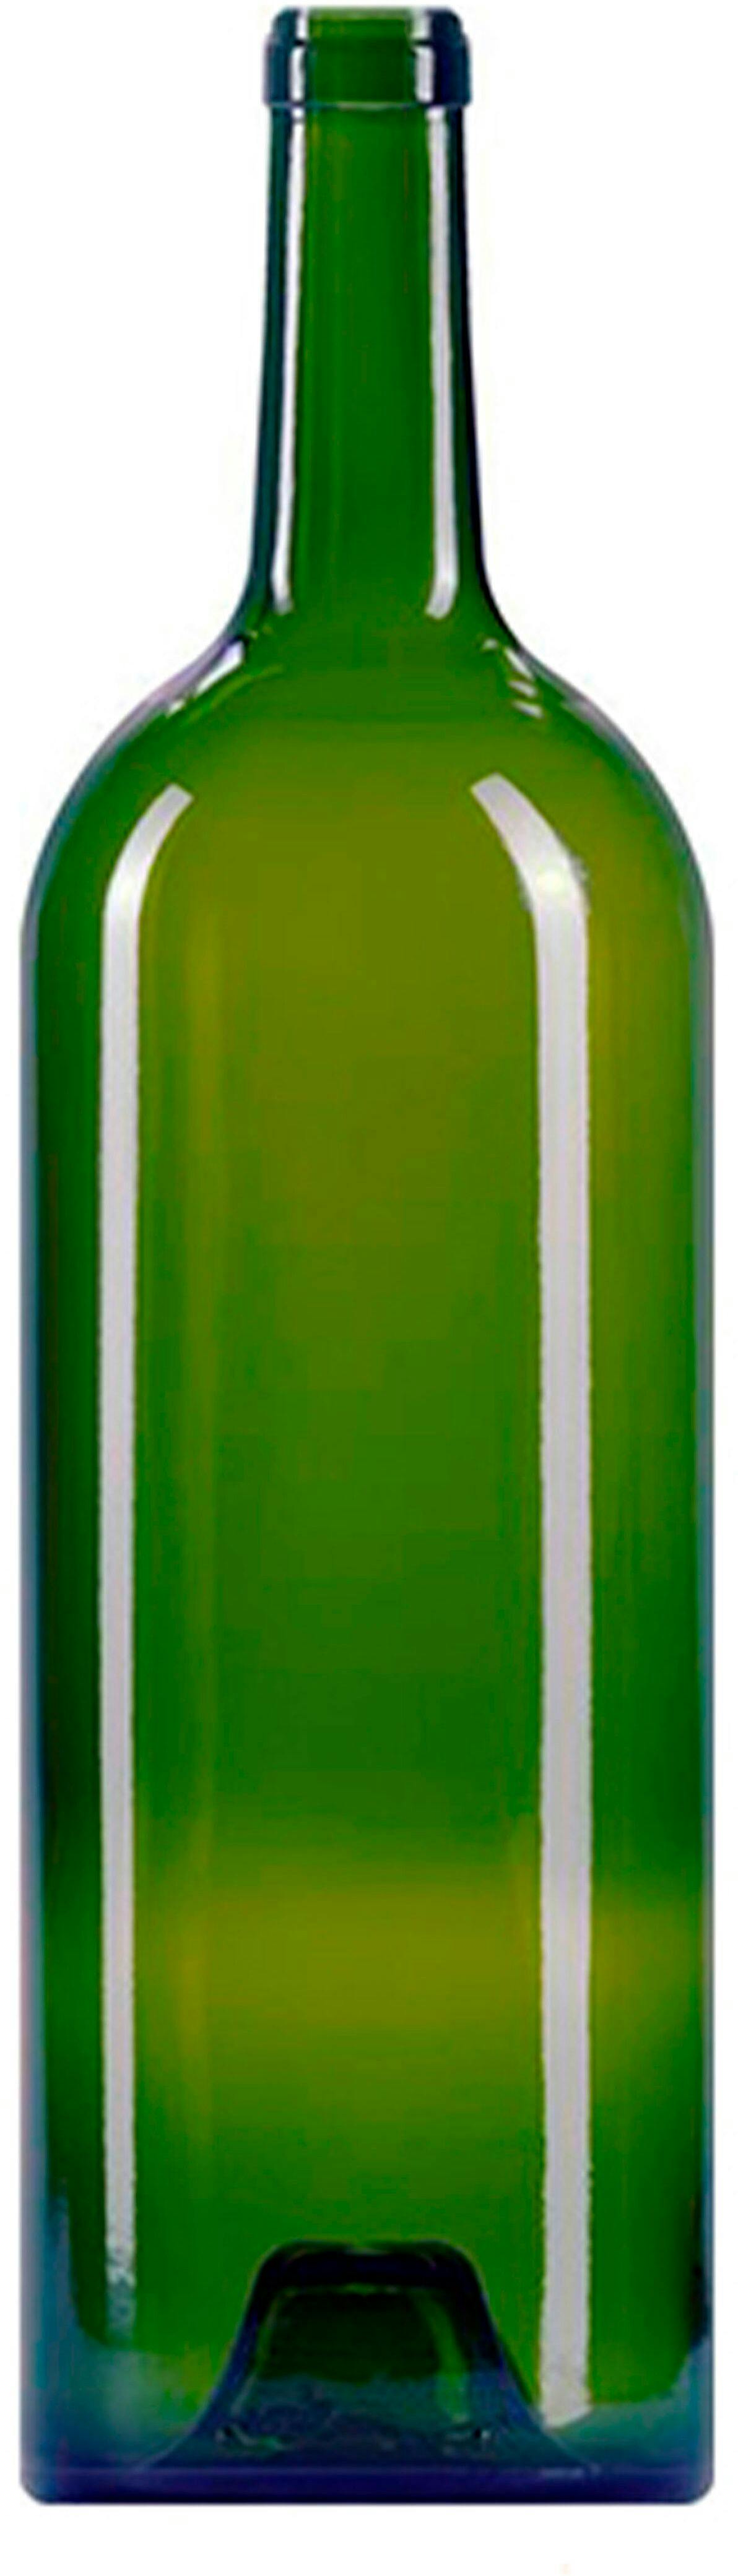 Flasche Bordeaux   GRAND VIN 1500 ml BG-Korken